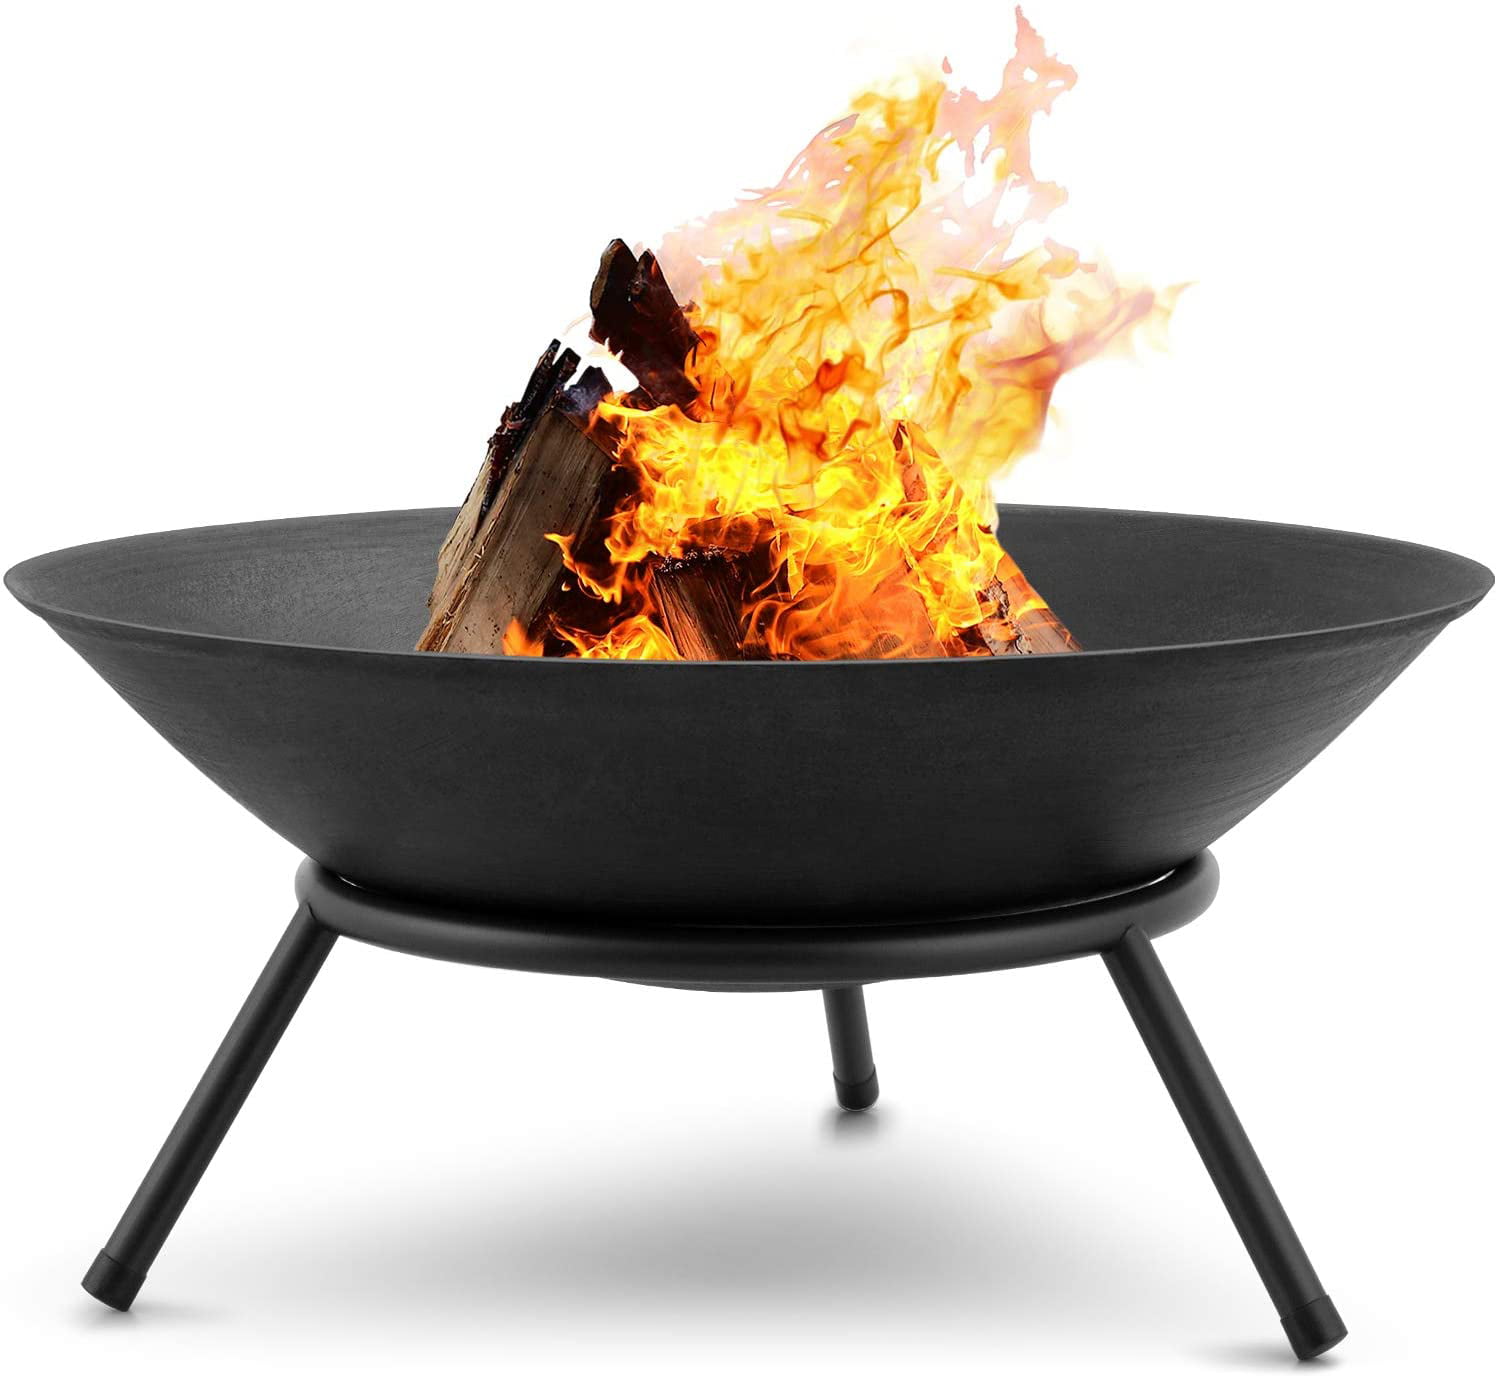 Amagabeli Fire Pit Outdoor Wood Burning, Large Wood Fire Pit Bowl